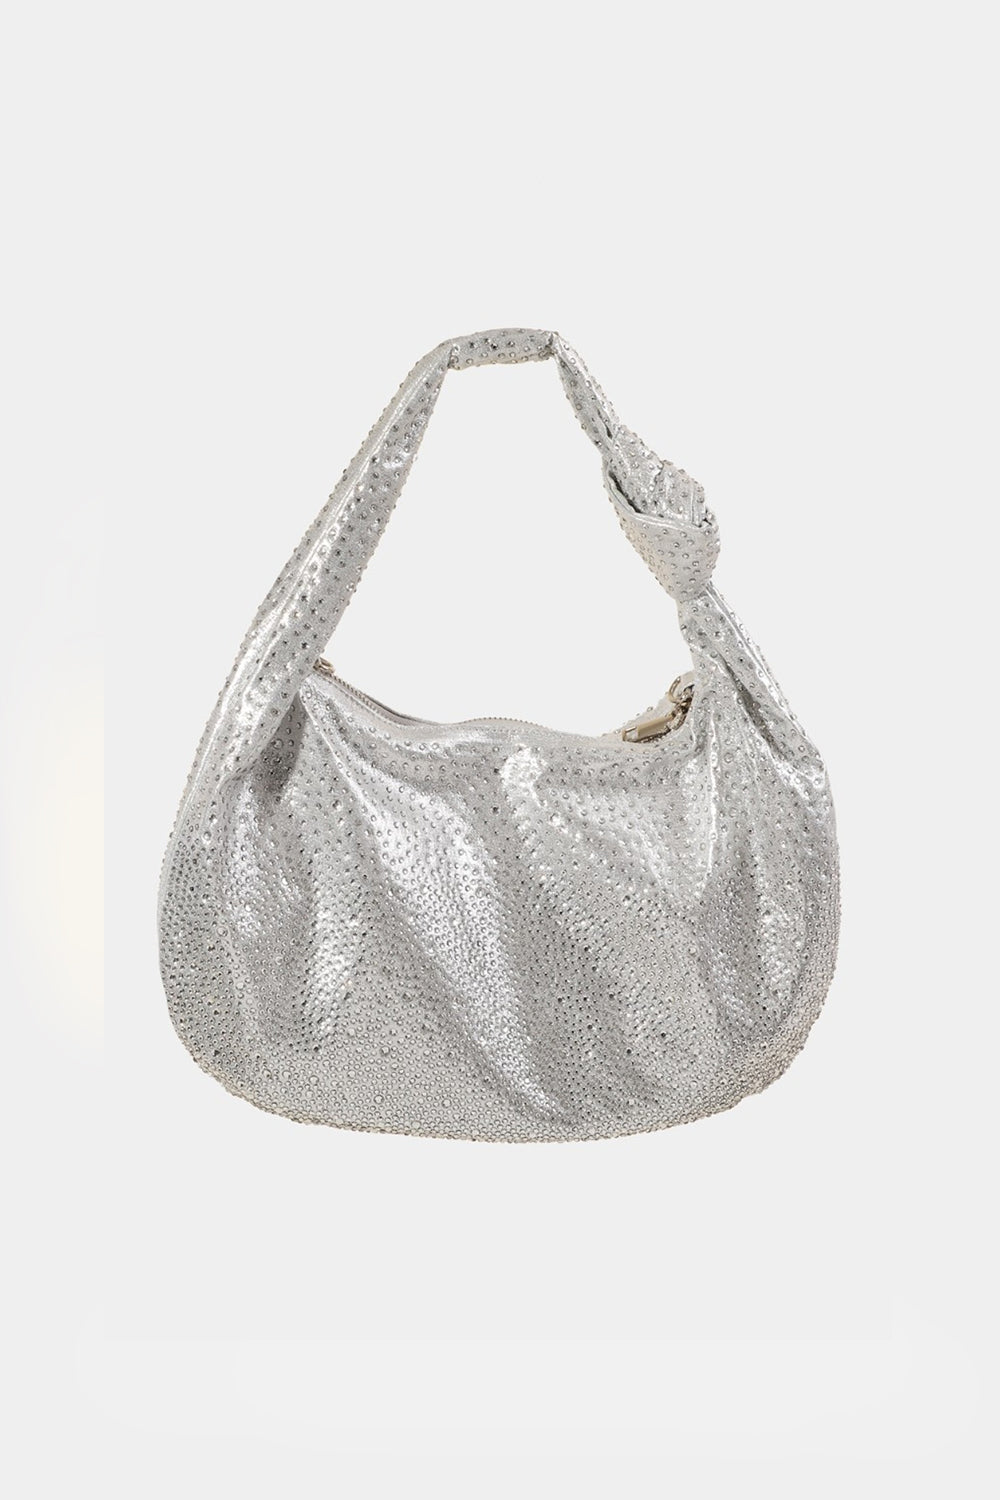 Fame Rhinestone Studded Handbag Silver One Size 